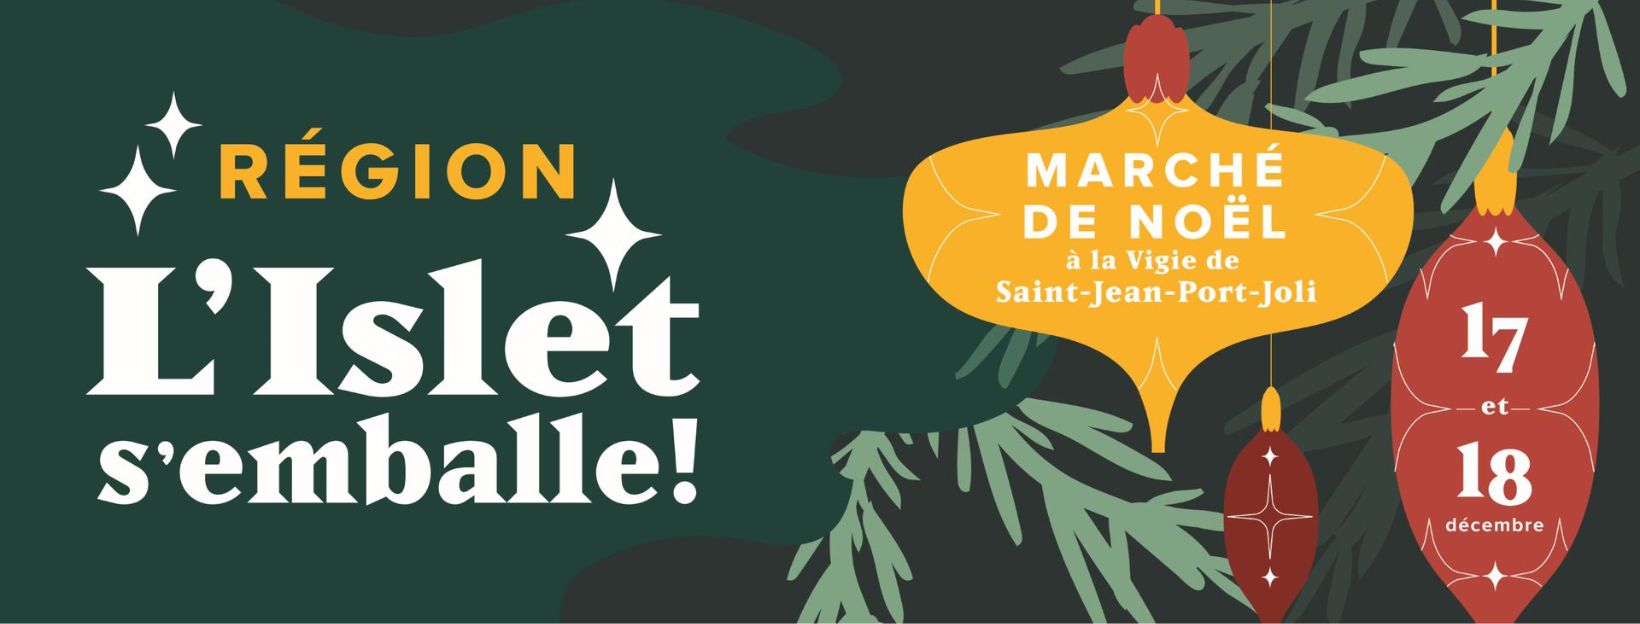 Marché de Noël de Saint-Jean-Port-Joli | MRC de L'Islet